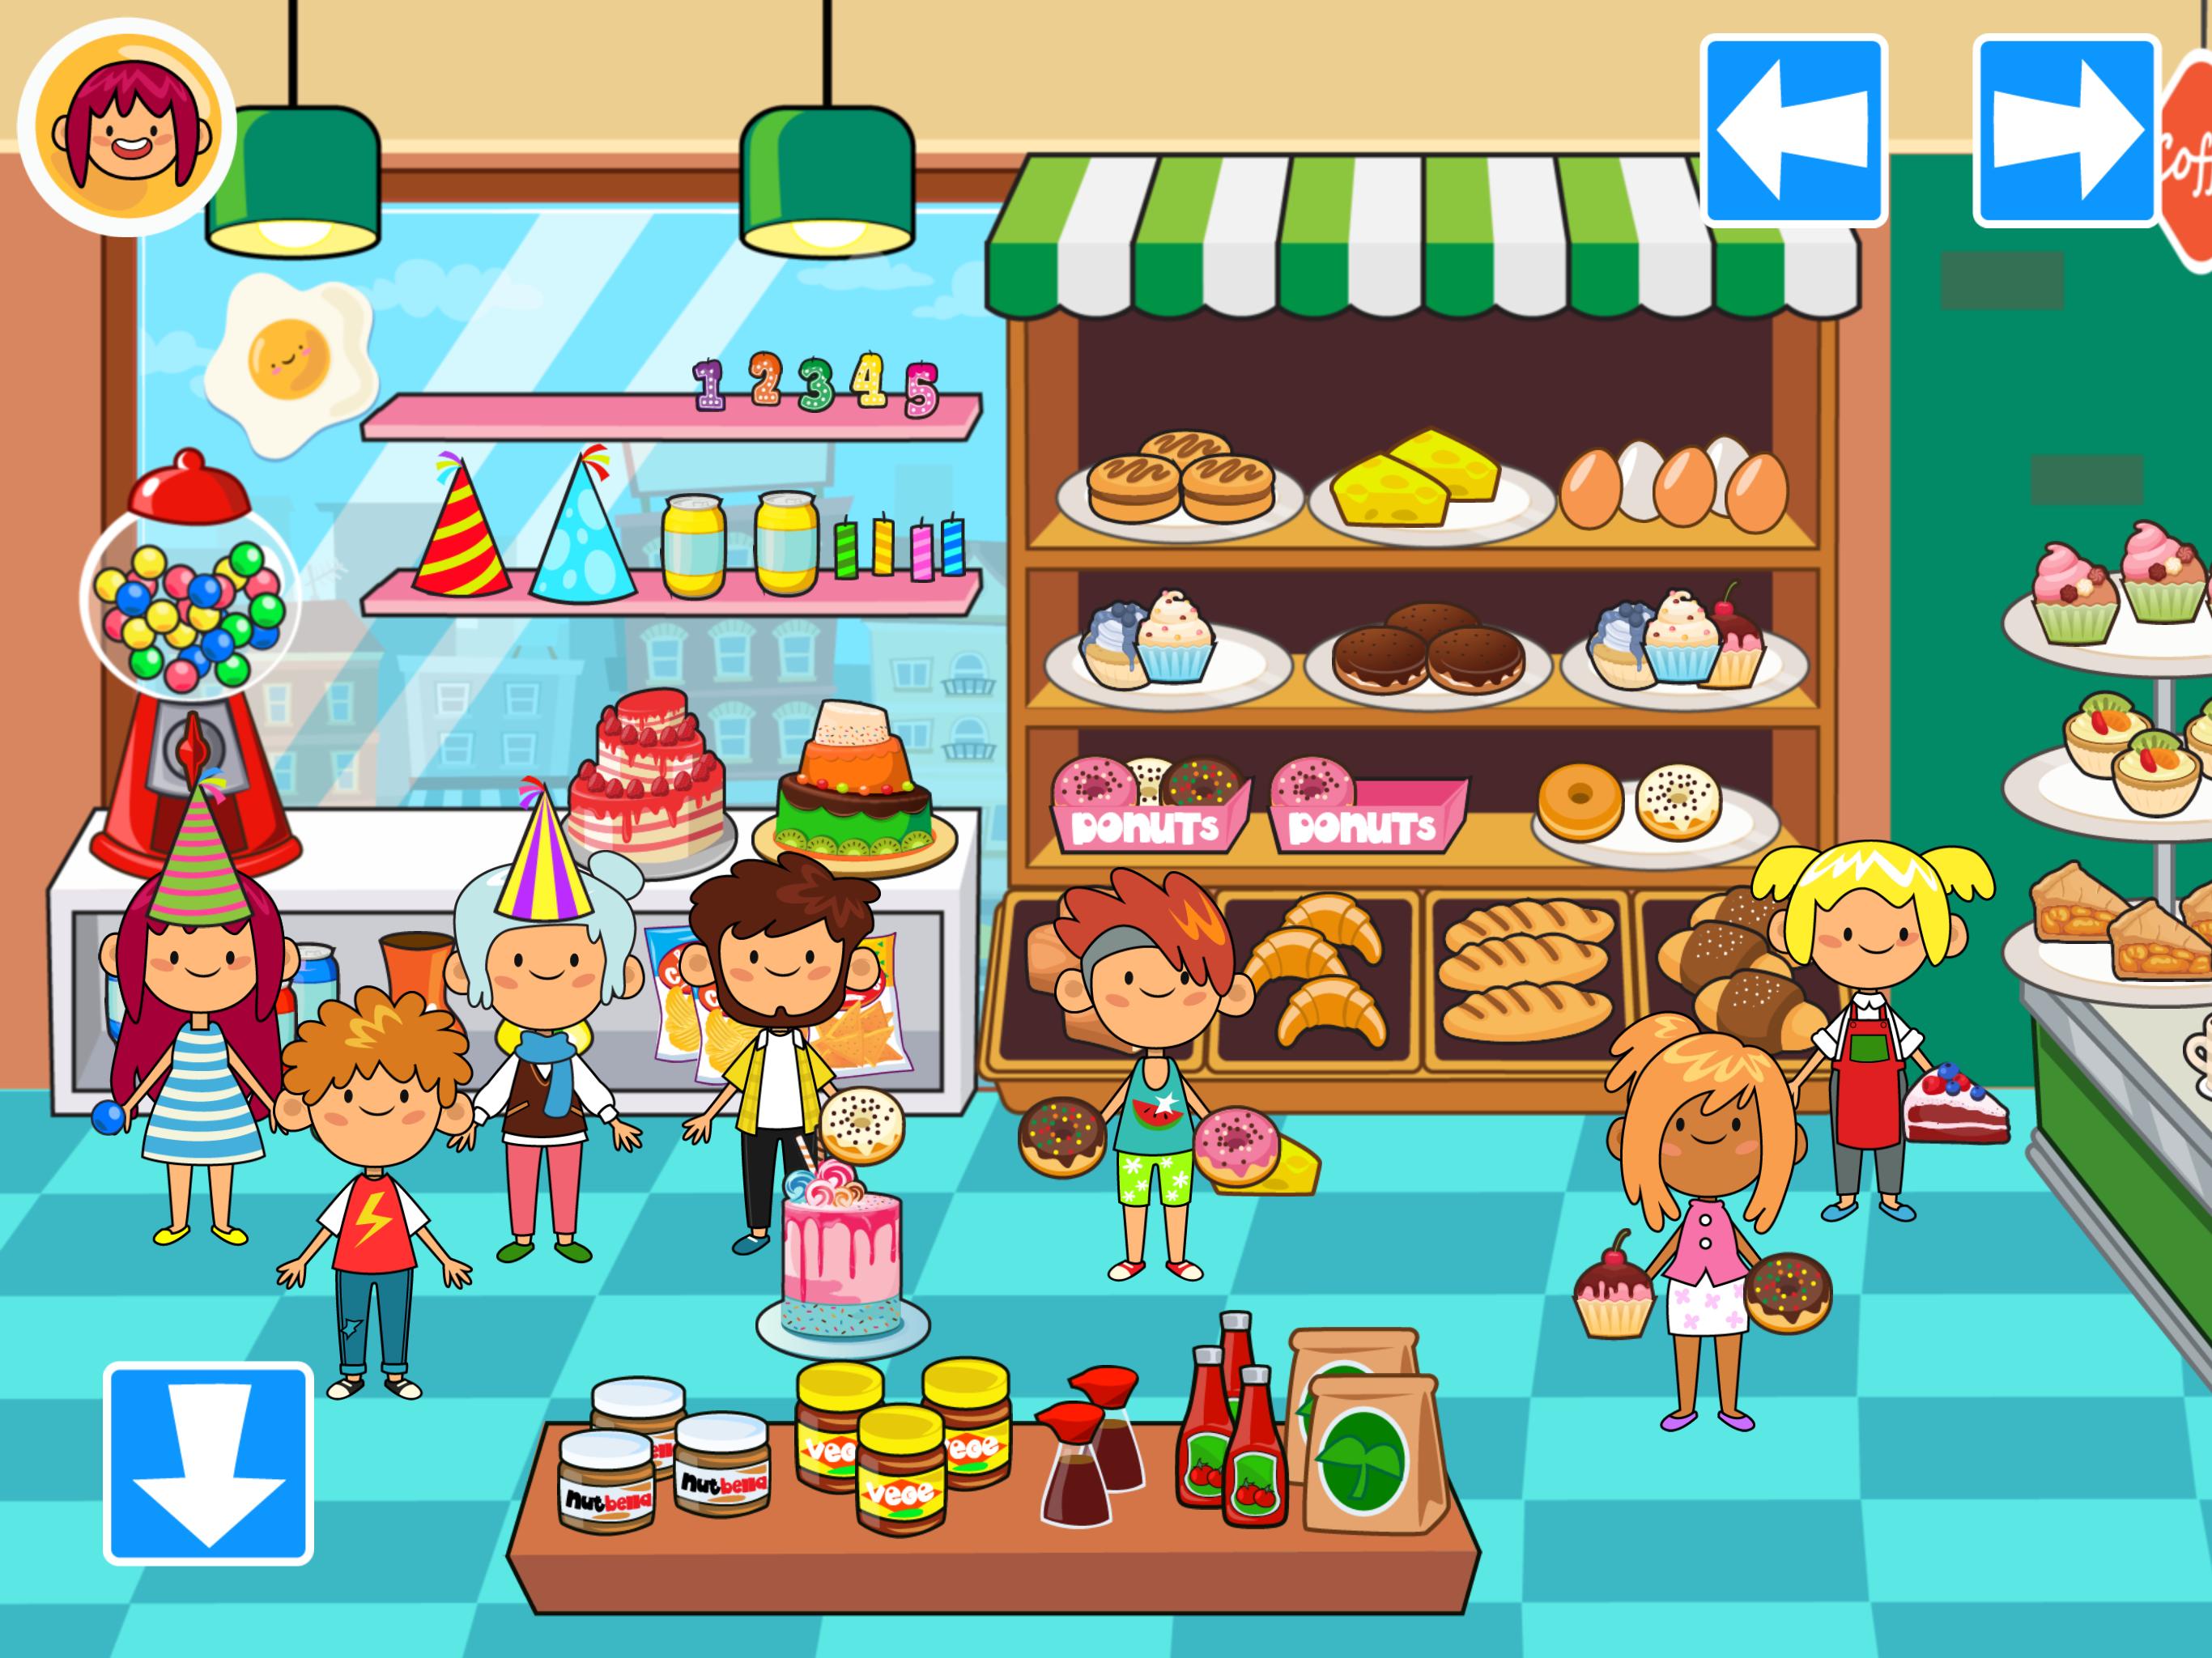 1 game store. Игра магазин продуктов. Игра продуктовый магазин для детей. Игра магазин продуктов для детей. Магазин продуктовый Ира.